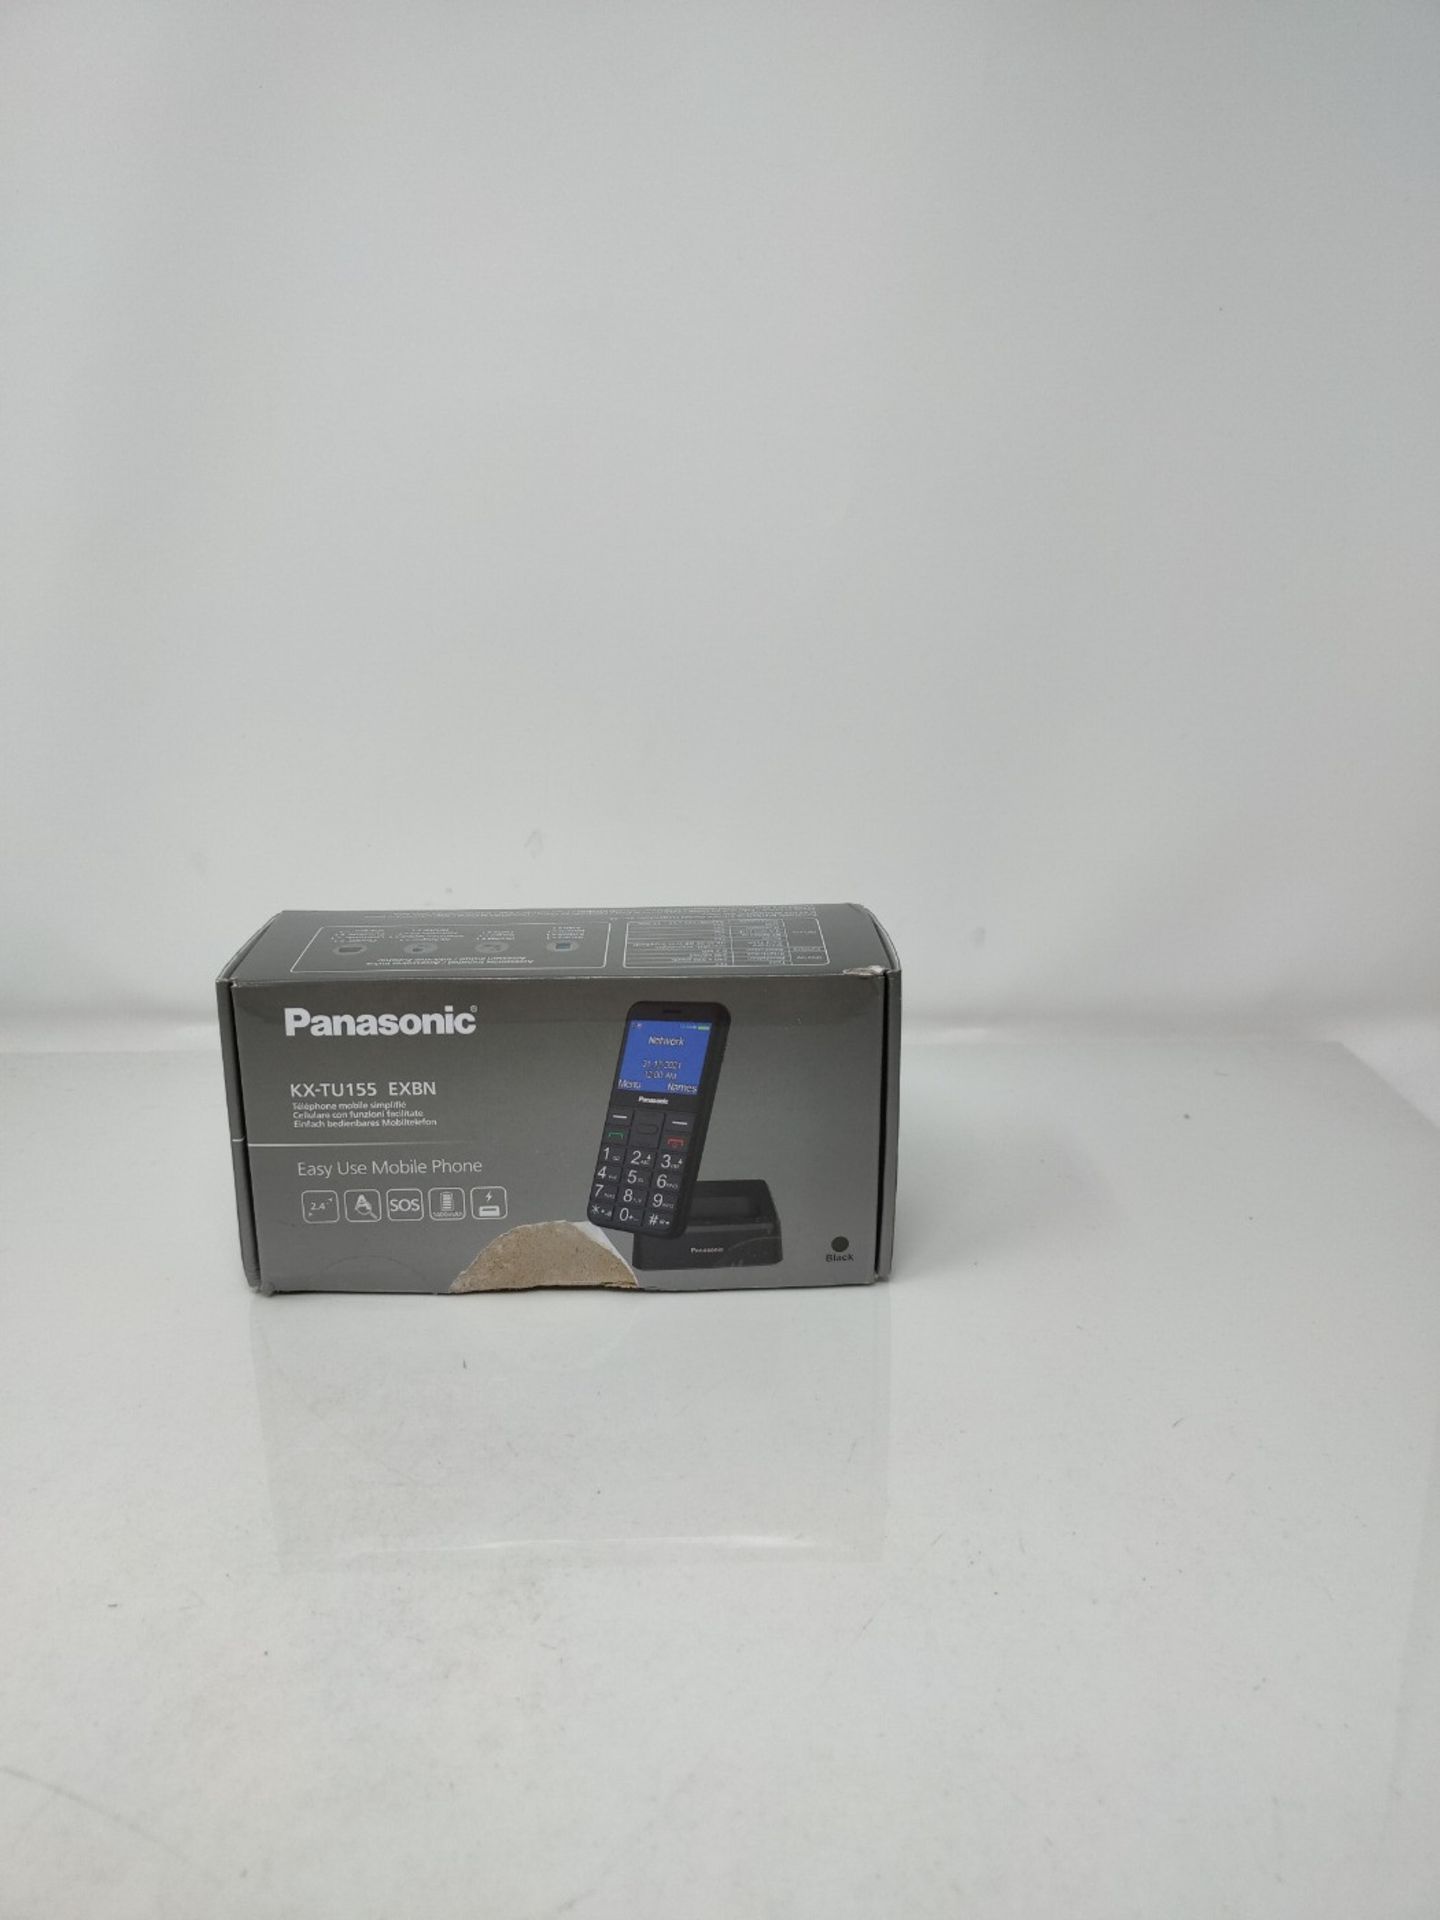 Panasonic KX-TU155 EXBN Easy Use Mobile Phone - Bild 2 aus 3